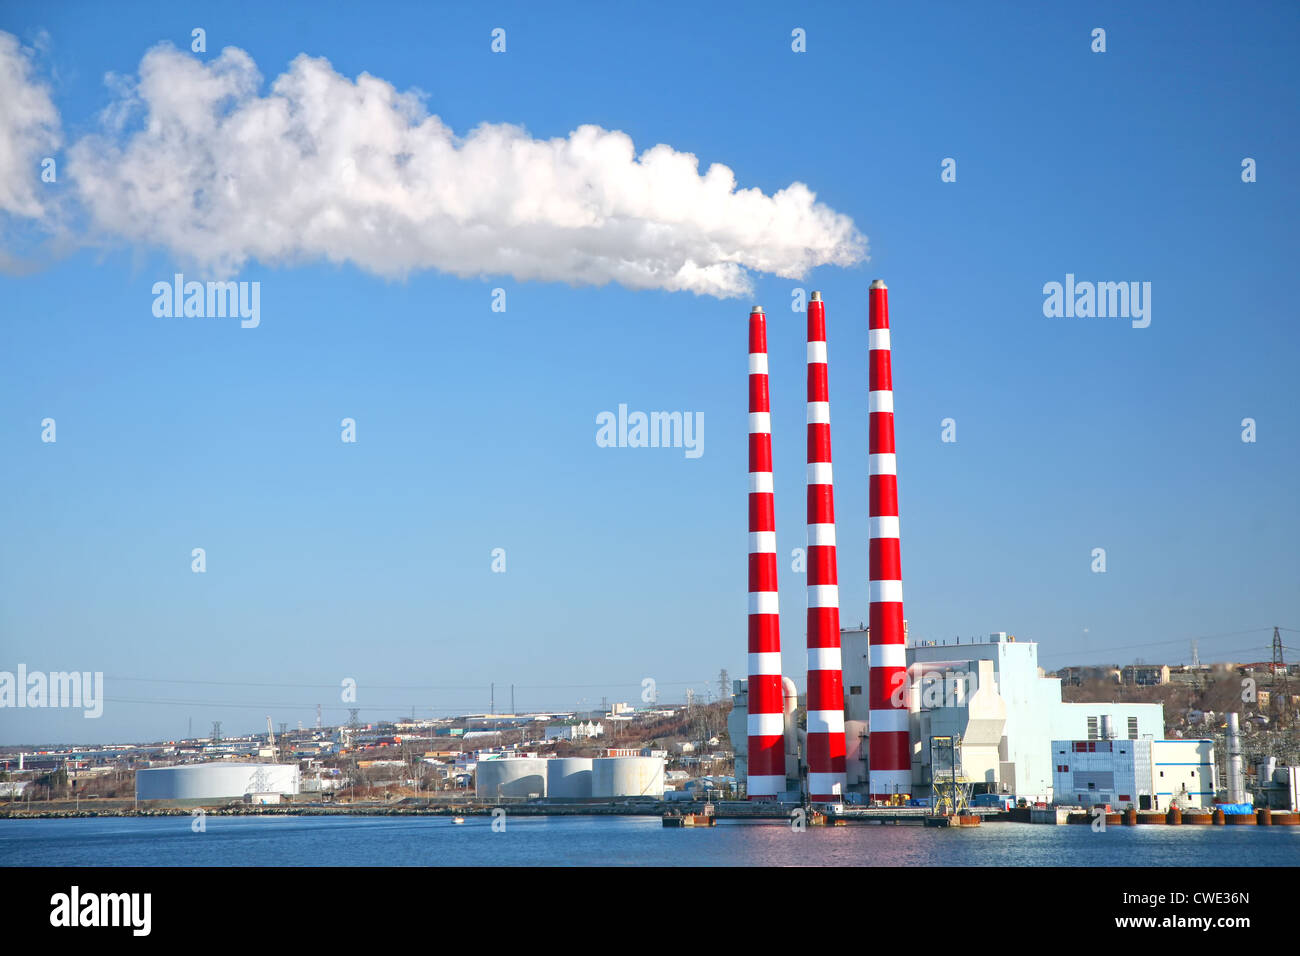 Coal fired power plant along the harbor in Halifax, Nova Scotia, Canada. Stock Photo